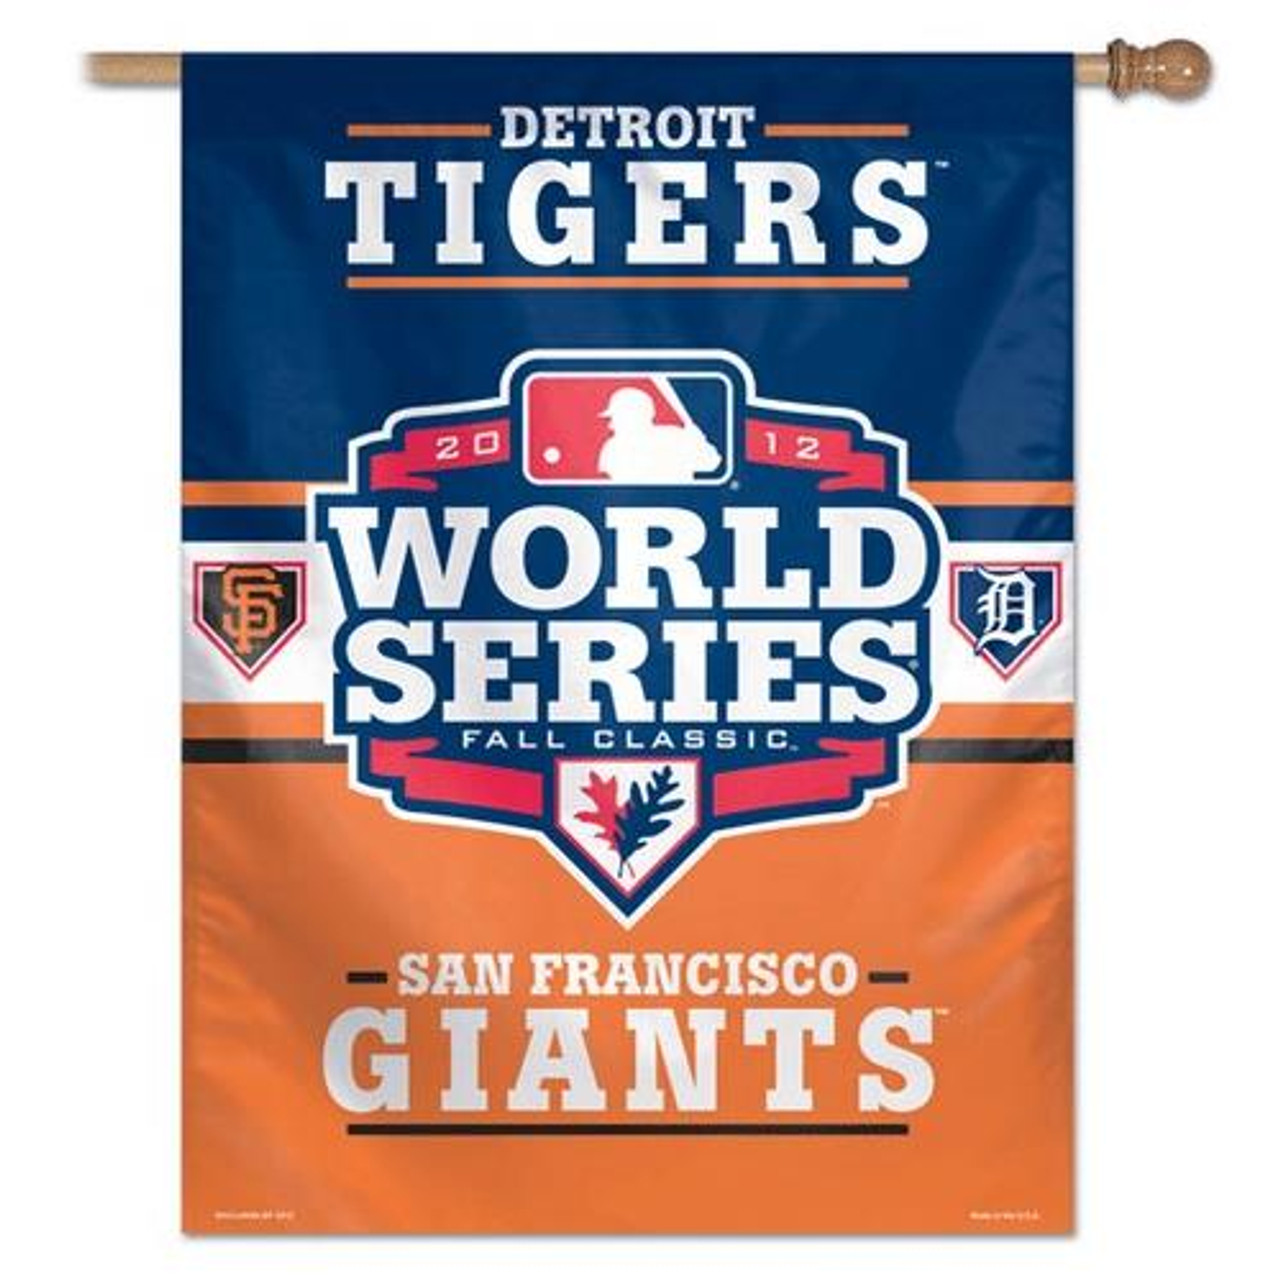 ISlides Official - ISlides USA - Detroit Tigers MLB Custom Slides Slides 12 / Orange Slides - Sandals - Slippers